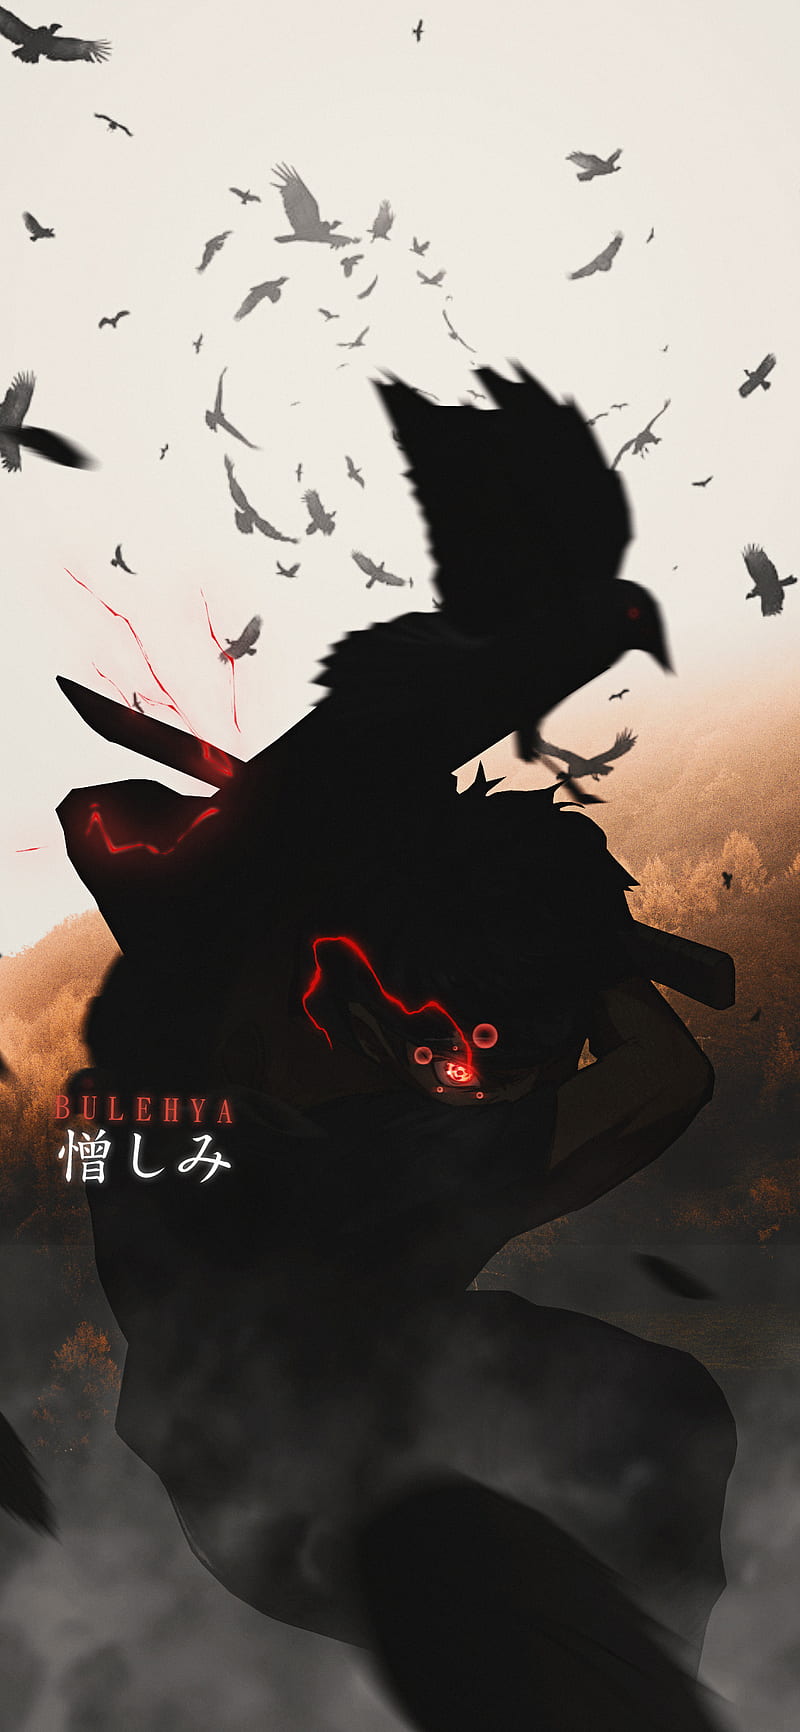 Idolish7] Crow attack - this is Tsukumo Ryo : r/anime